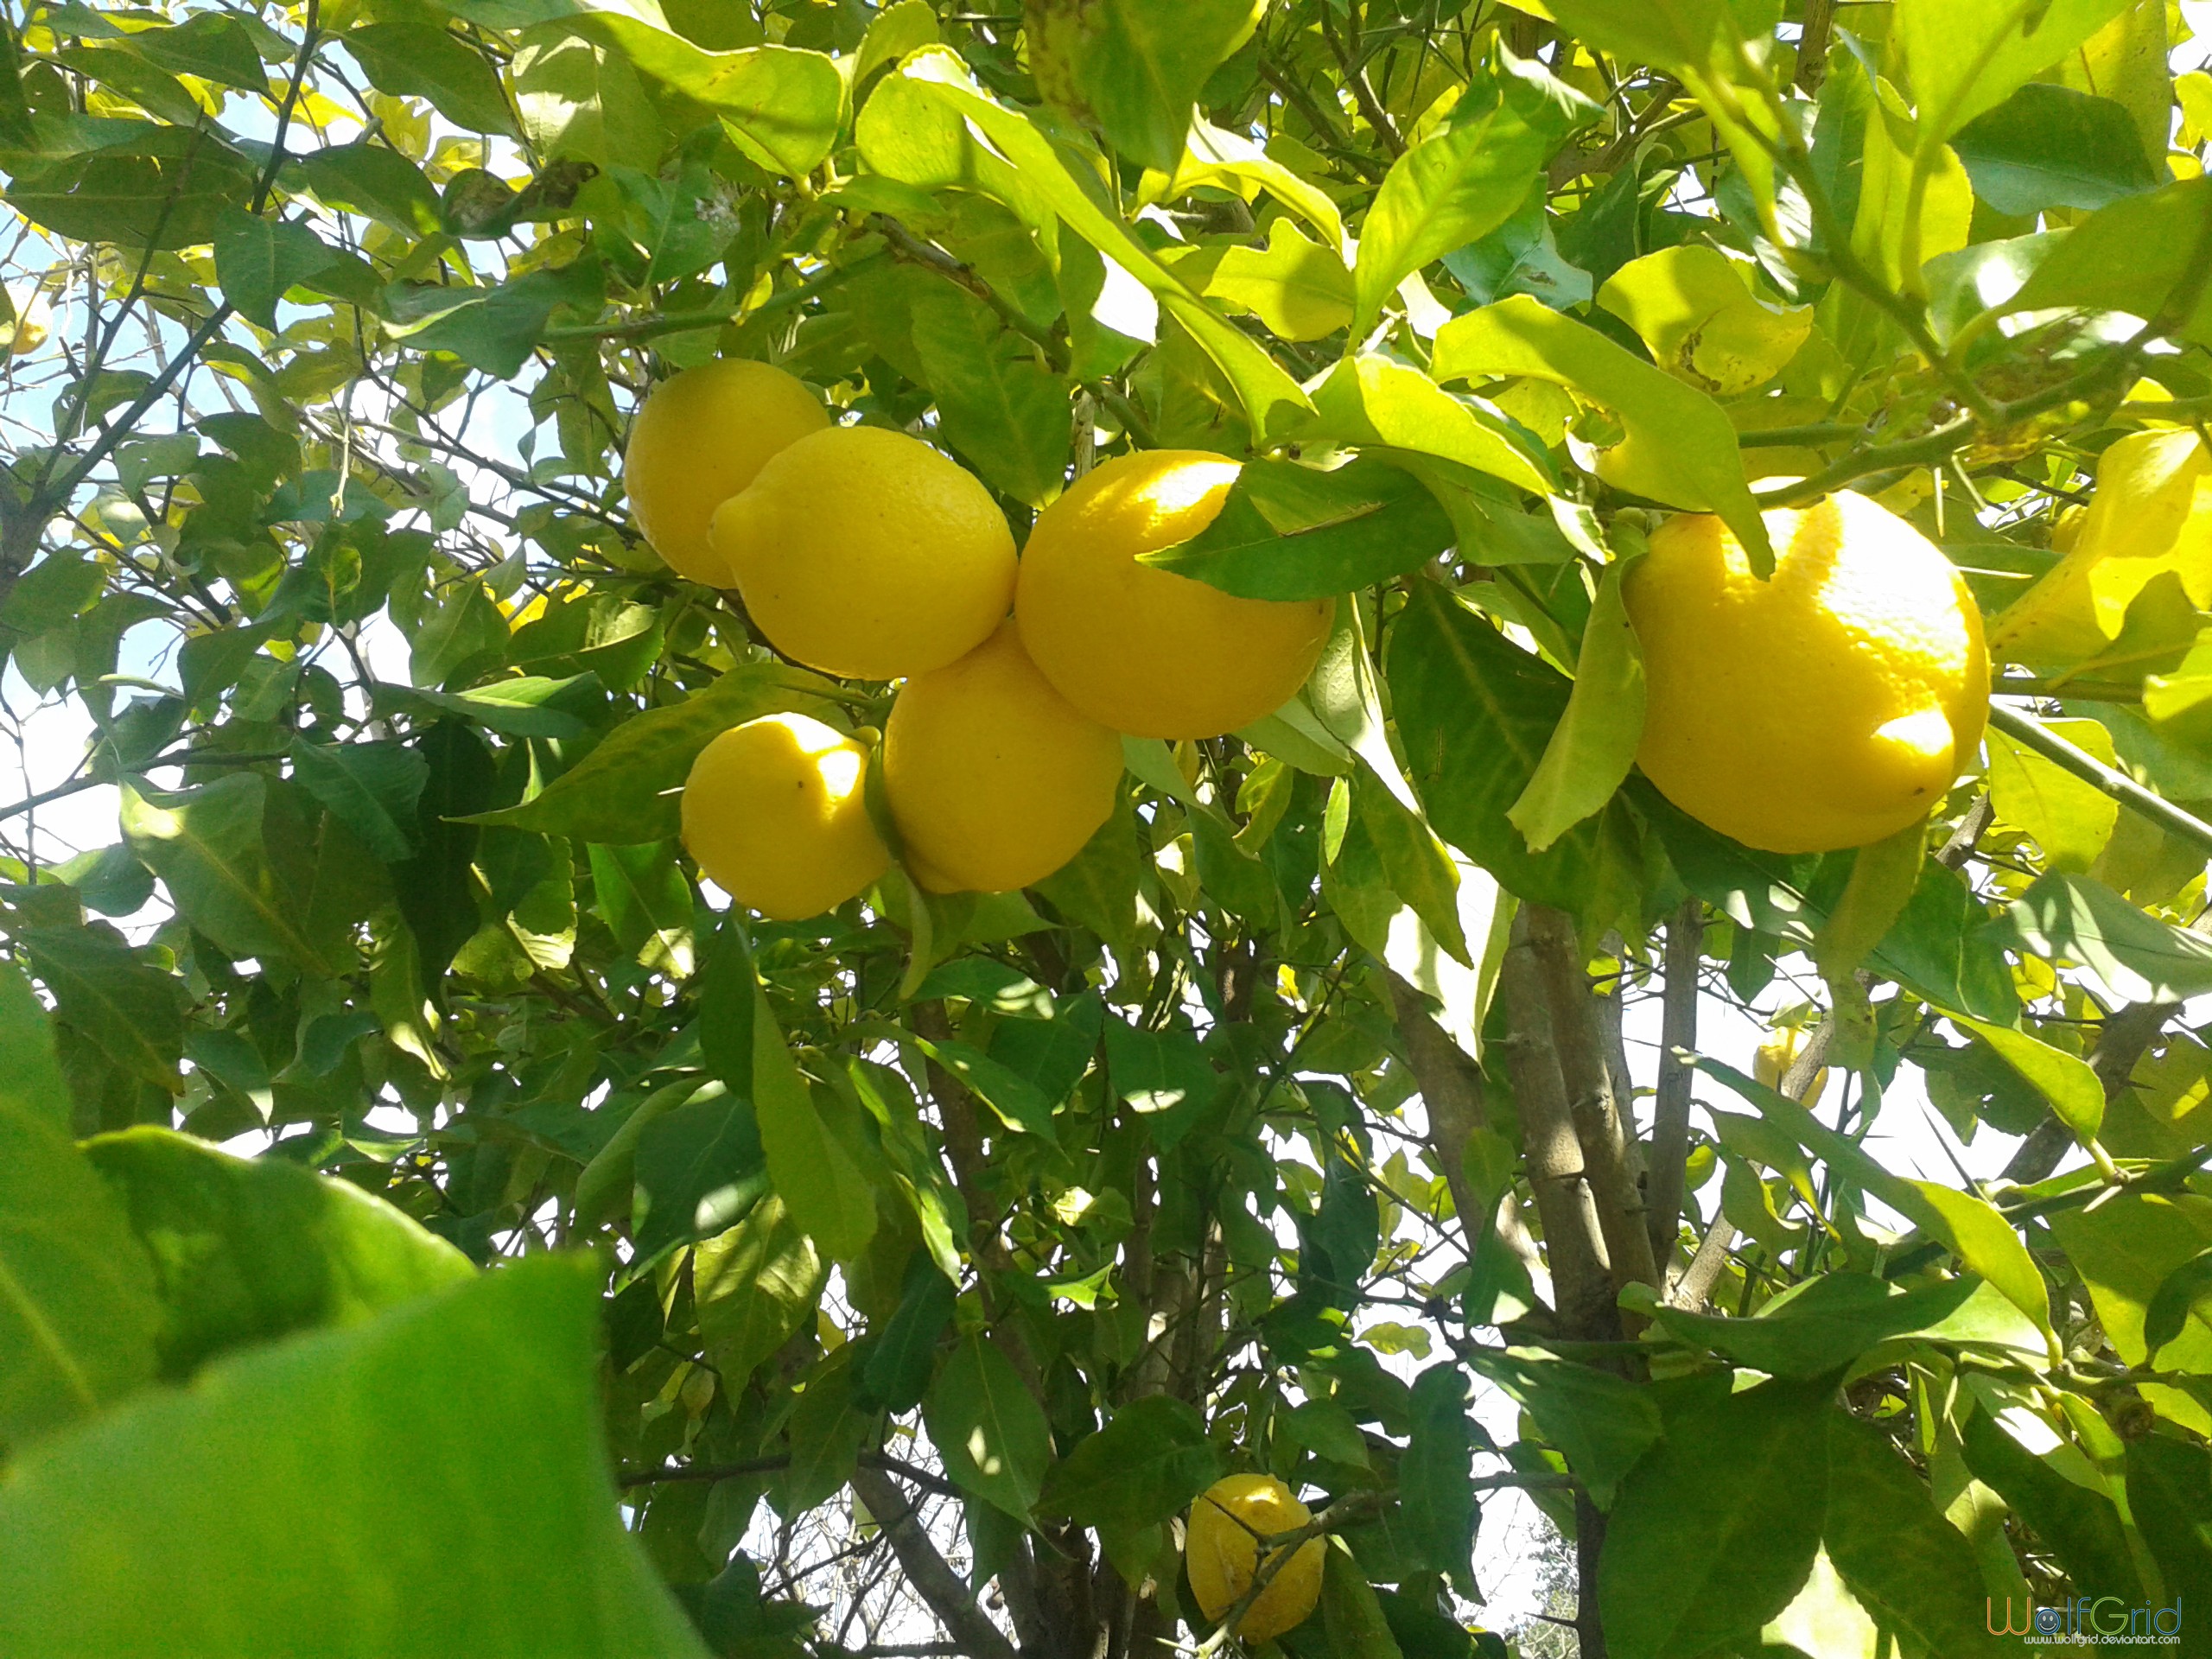 General 2560x1920 lemons fruit nature leaves plants closeup